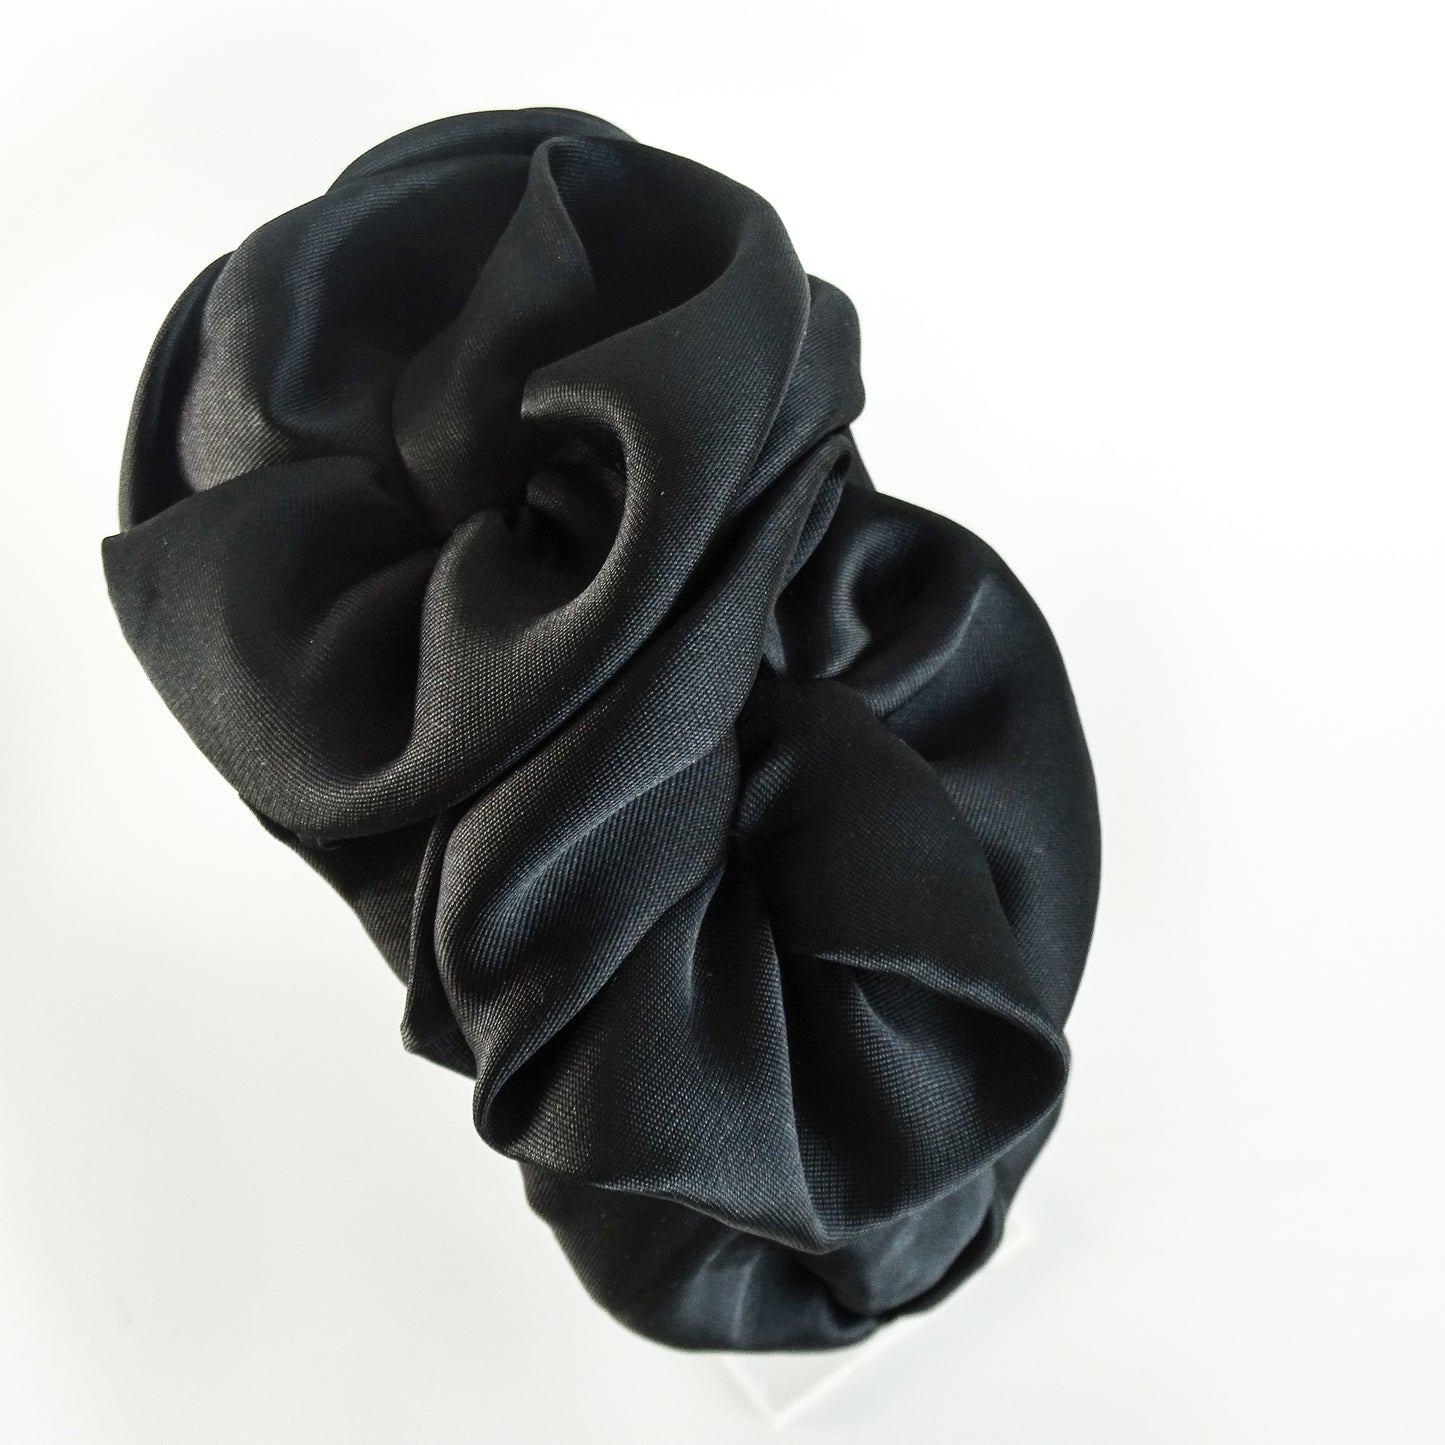 The Black Silk Rose Headband